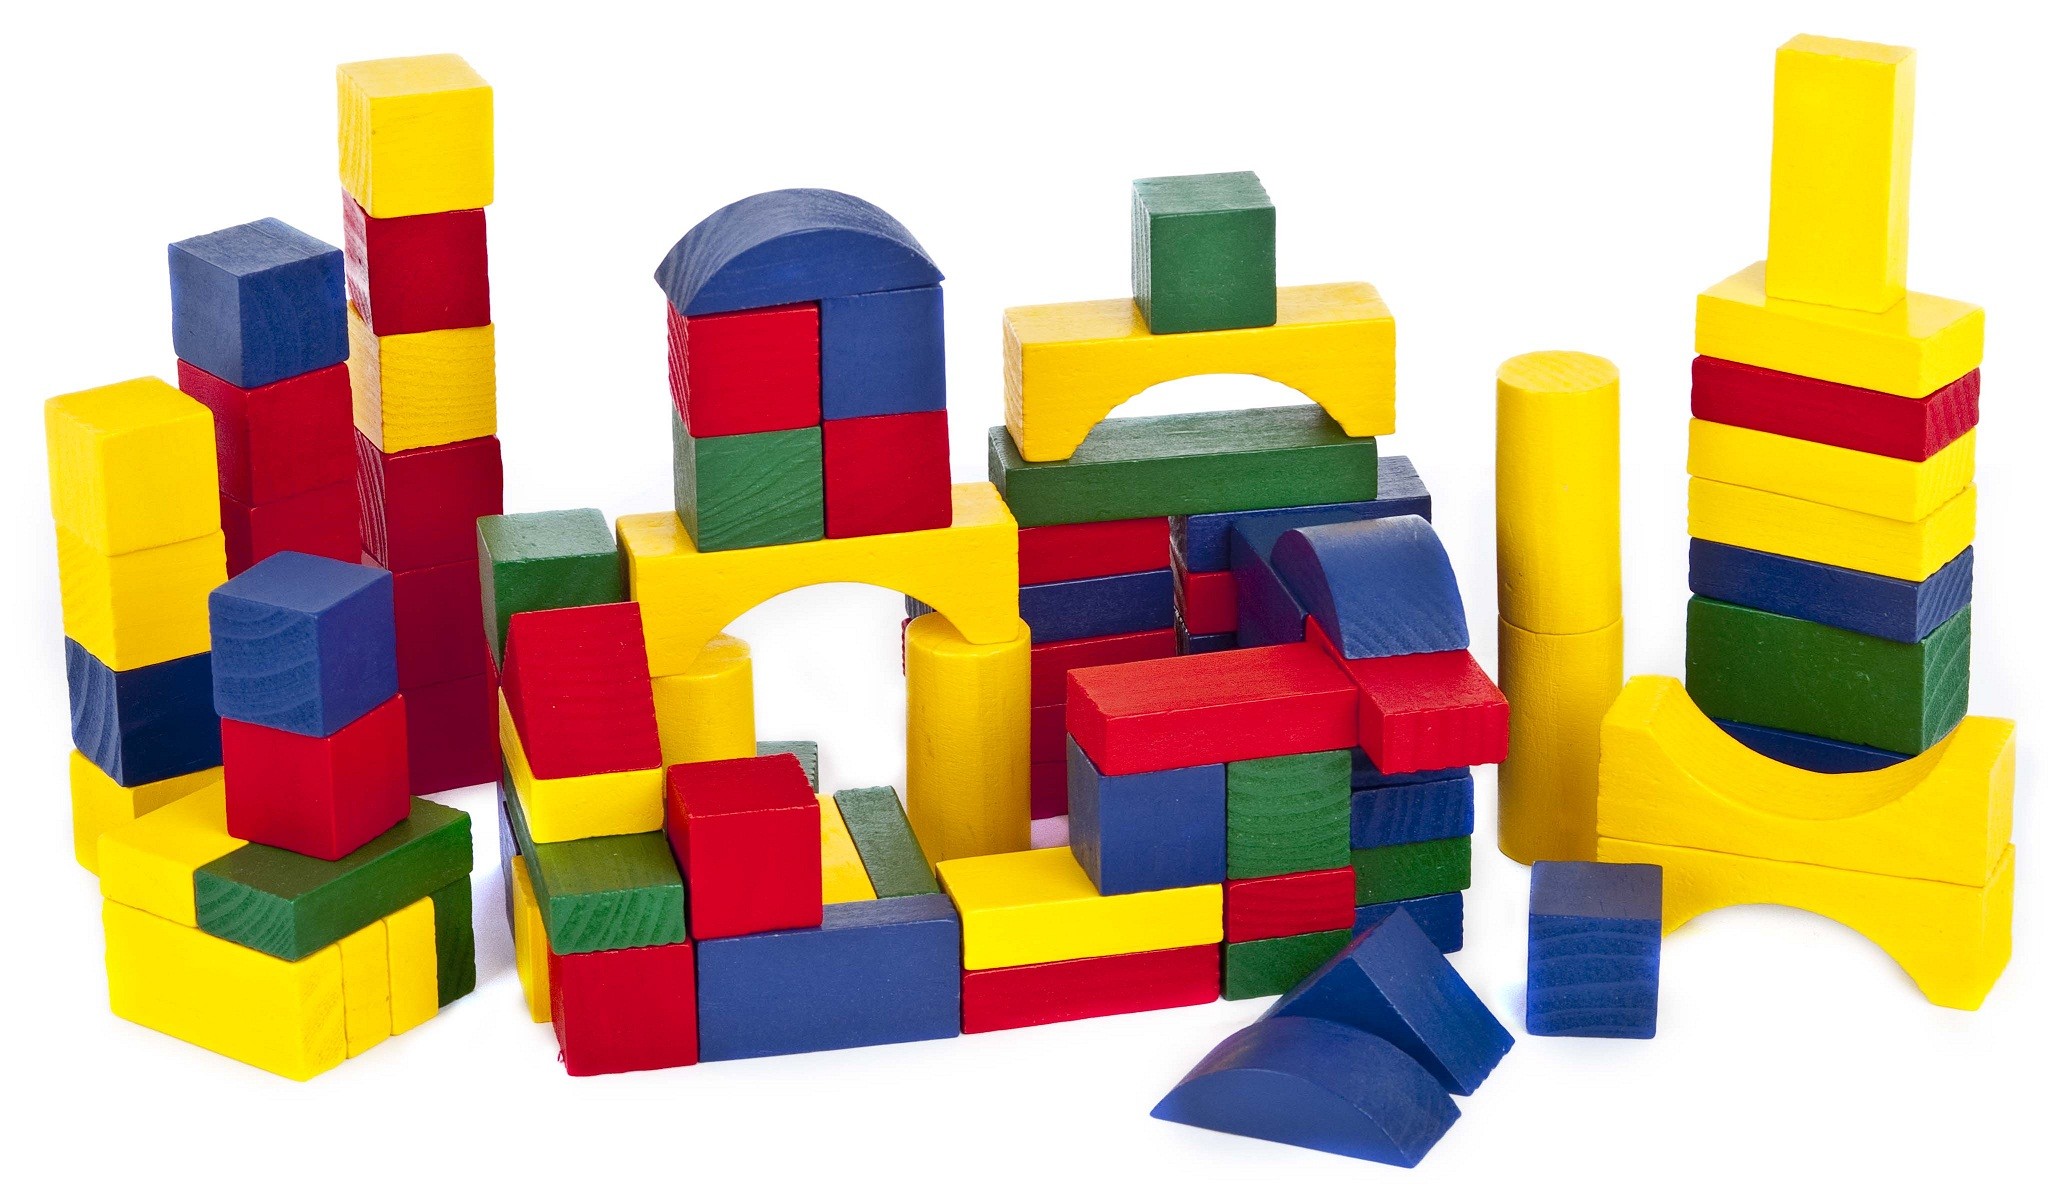 building bricks for kids